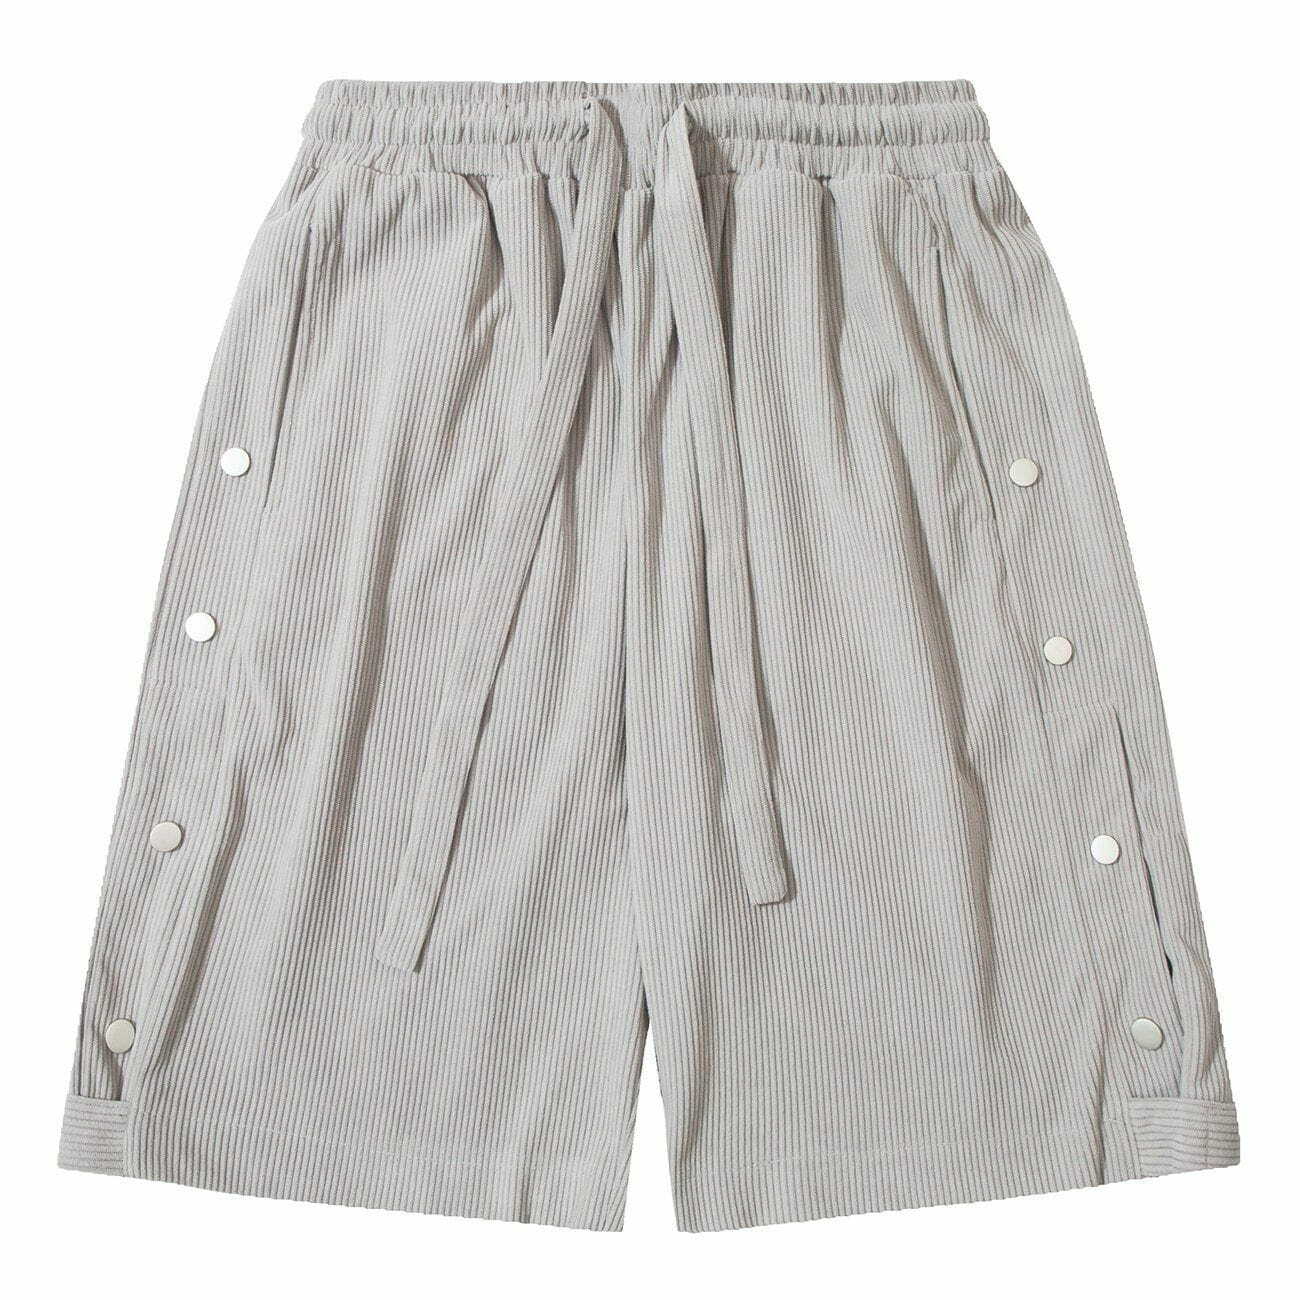 corduroy highwaist shorts retro & edgy streetwear 3436